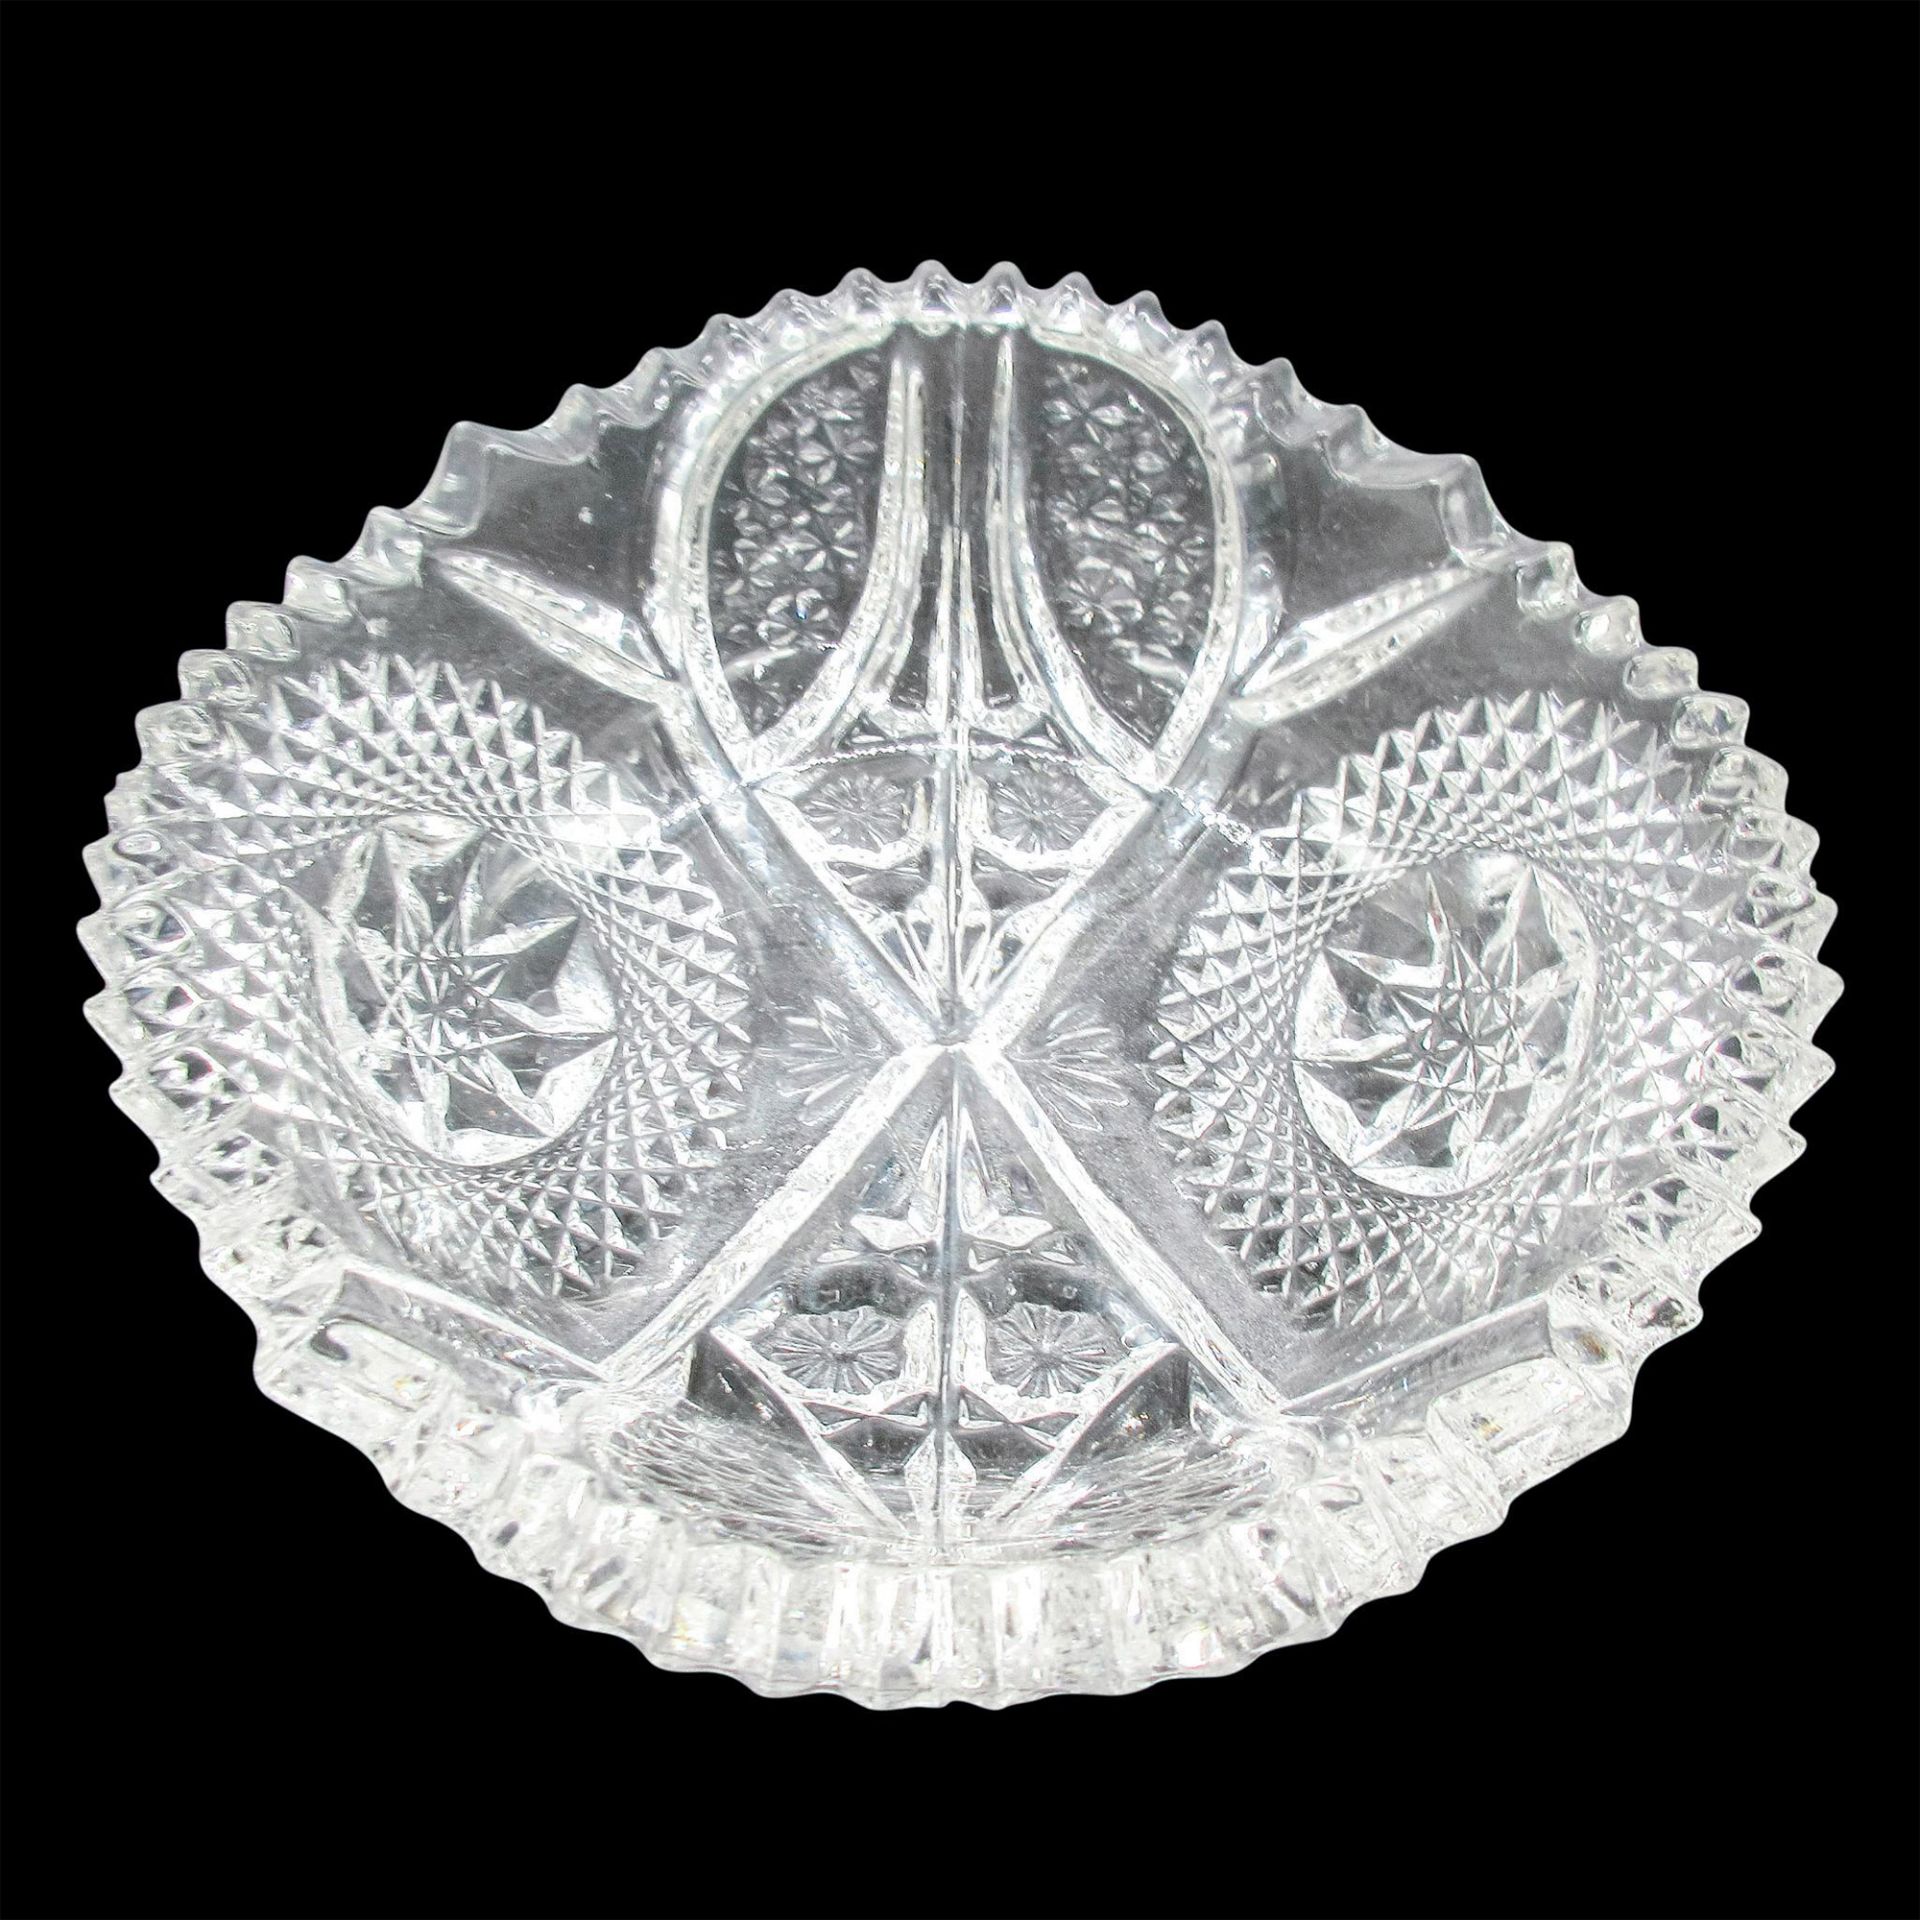 4pc Decorative Glass Fruit Bowls - Image 4 of 10